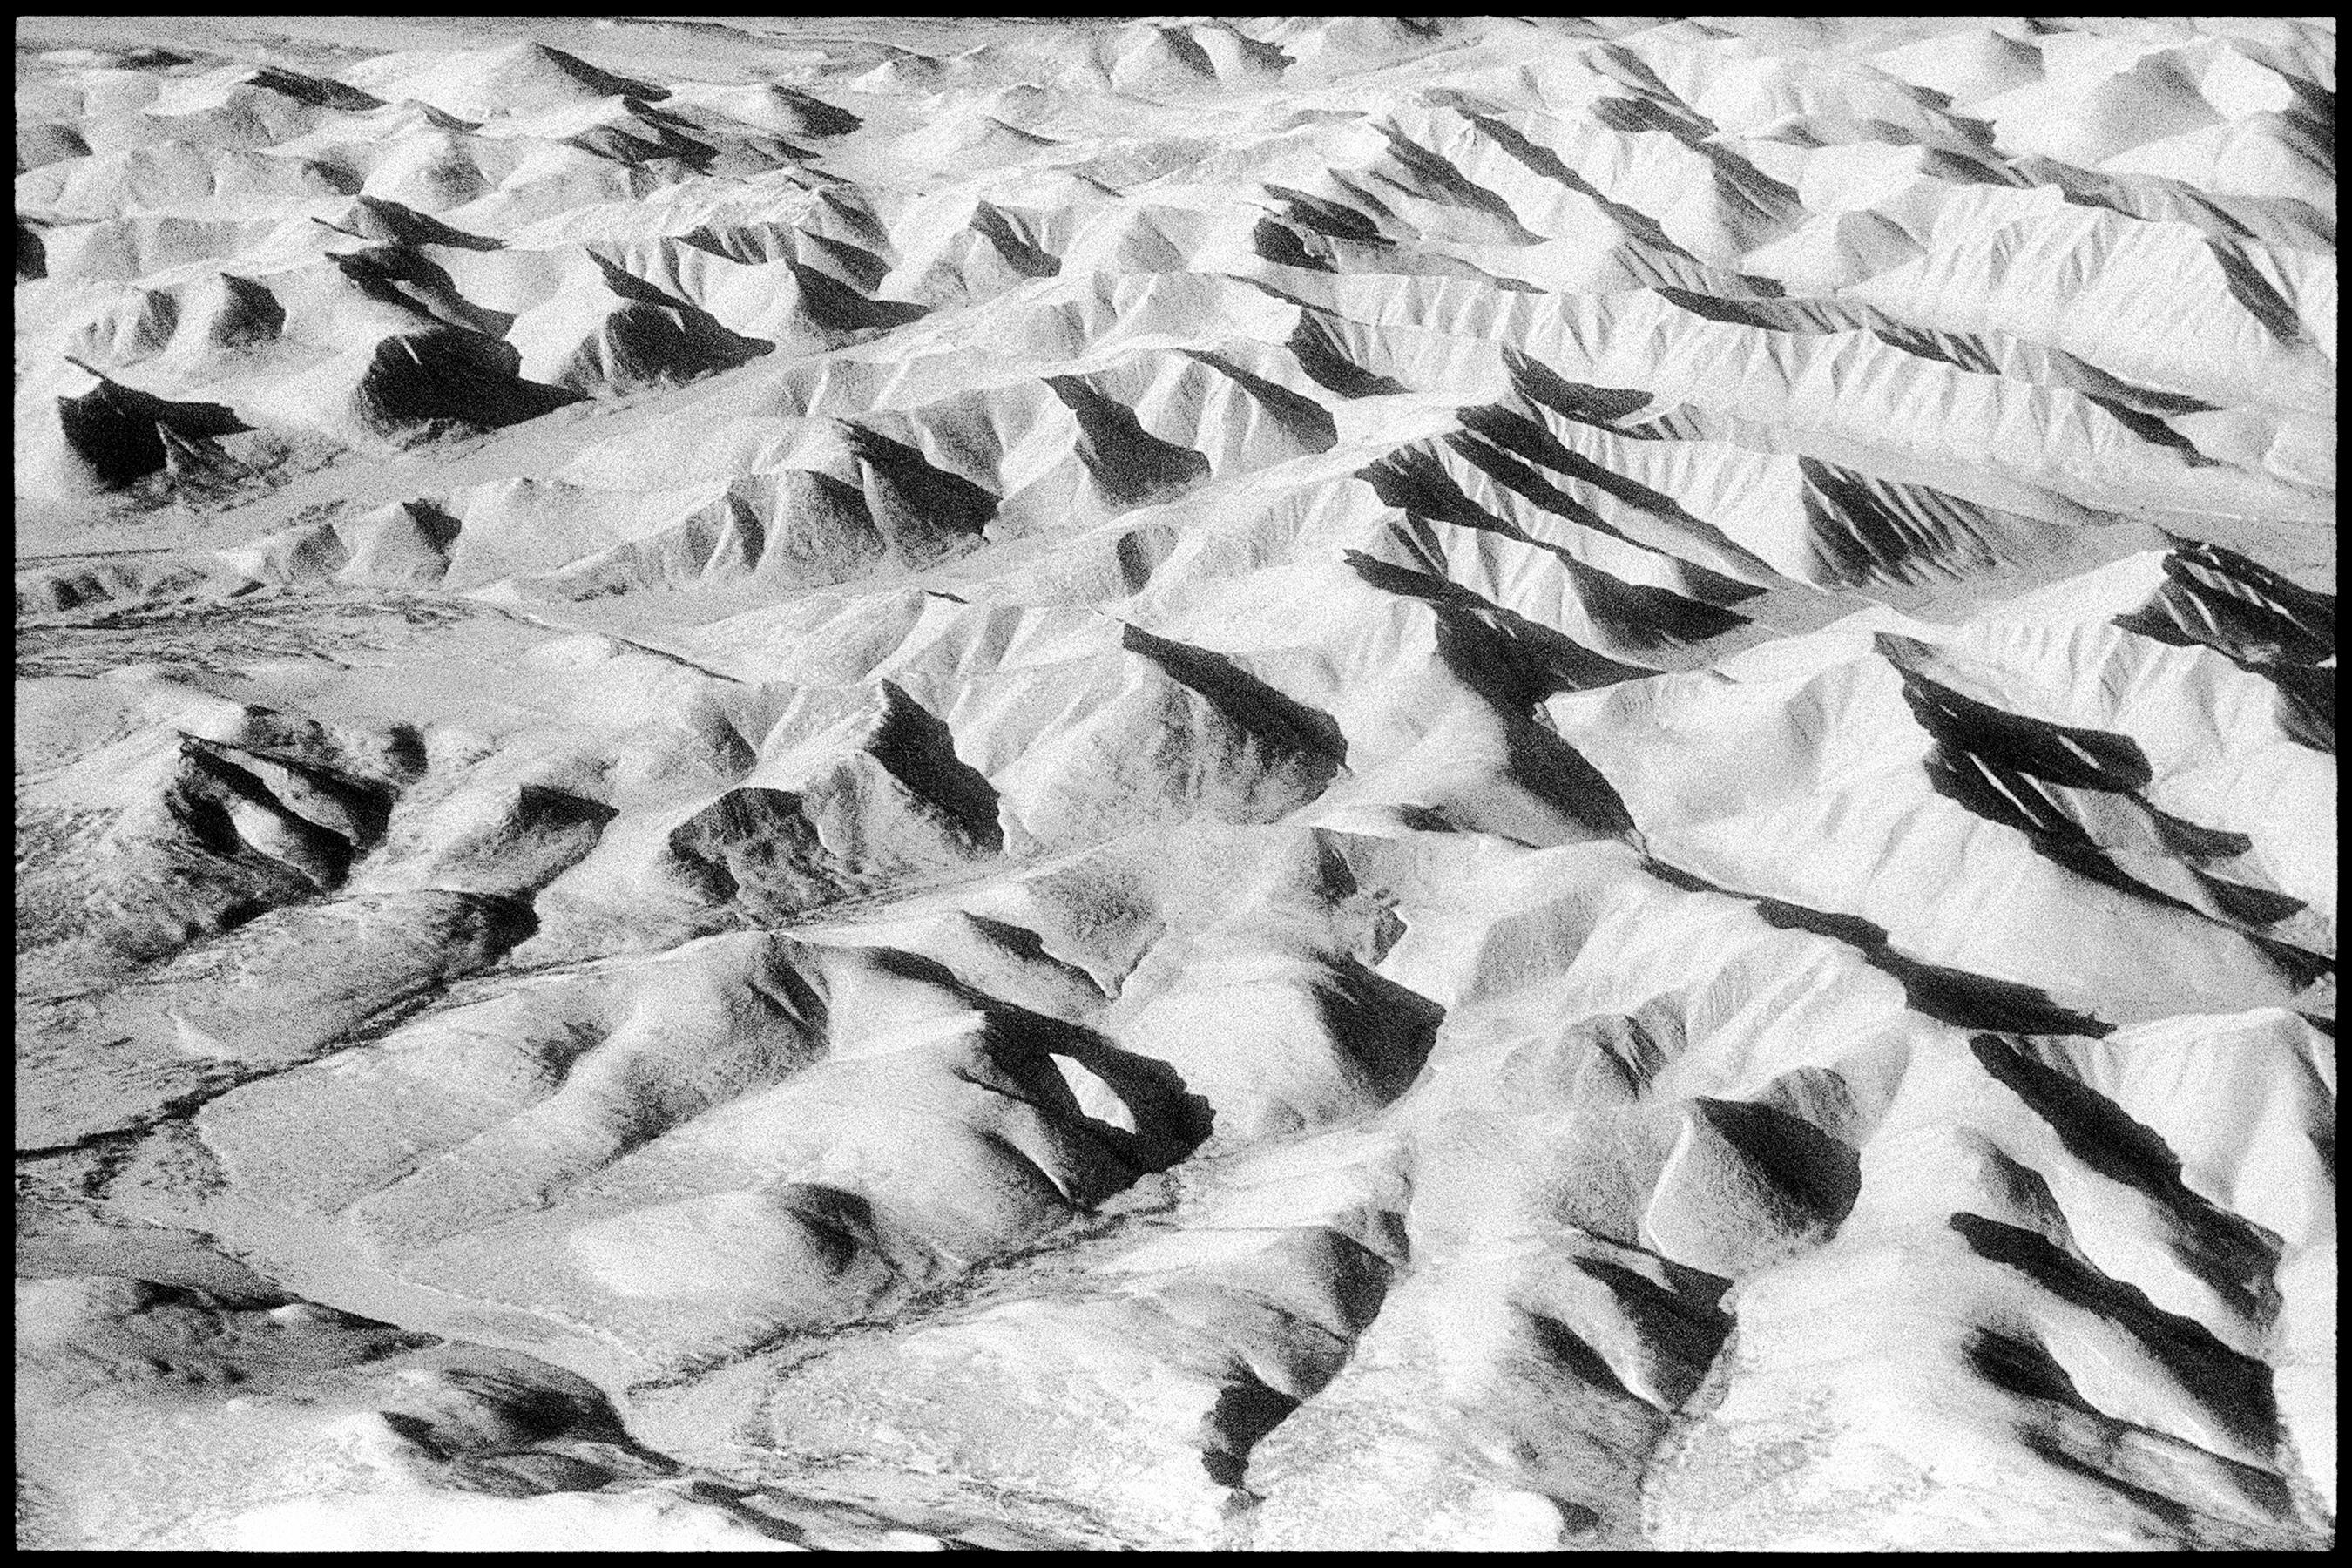 Edward Alfano Landscape Photograph - "Russia I" - Contemporary Landscape Infrared Aerial Photography (Black+White) 